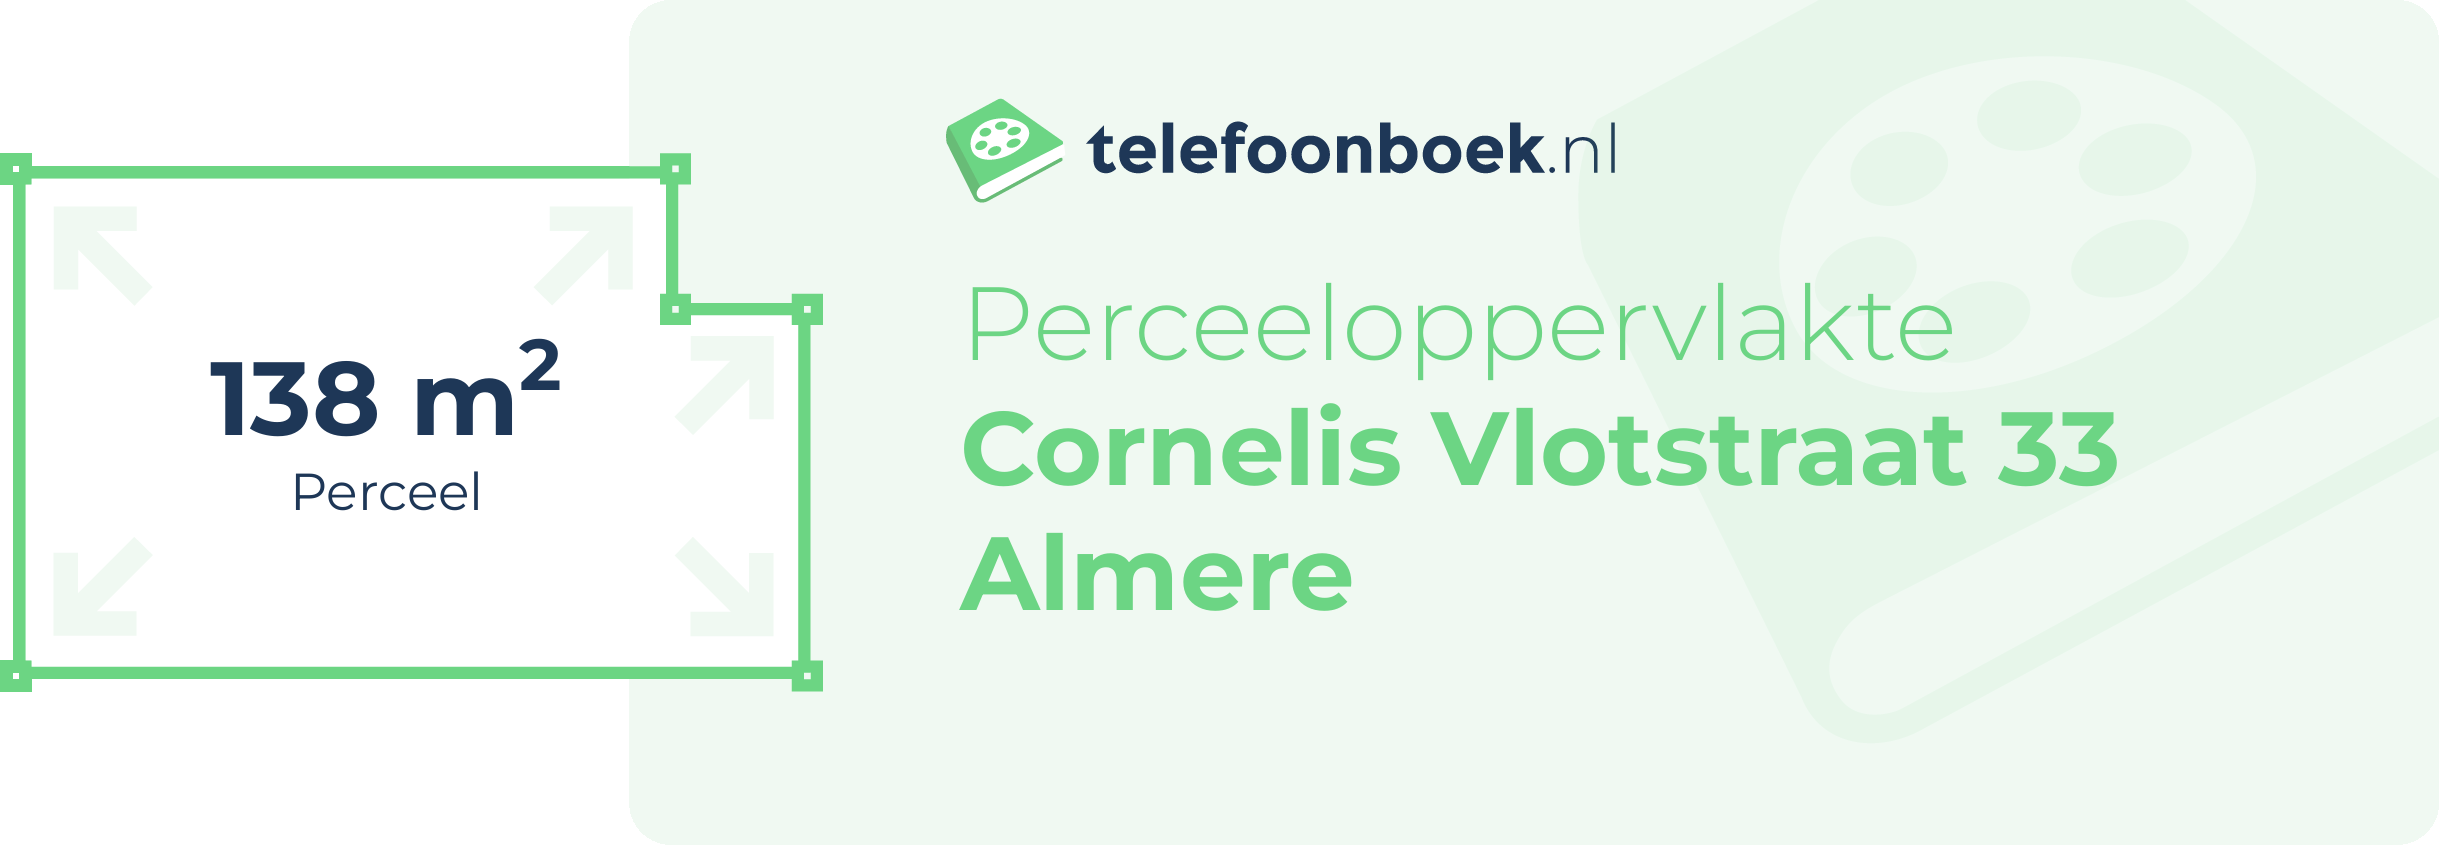 Perceeloppervlakte Cornelis Vlotstraat 33 Almere